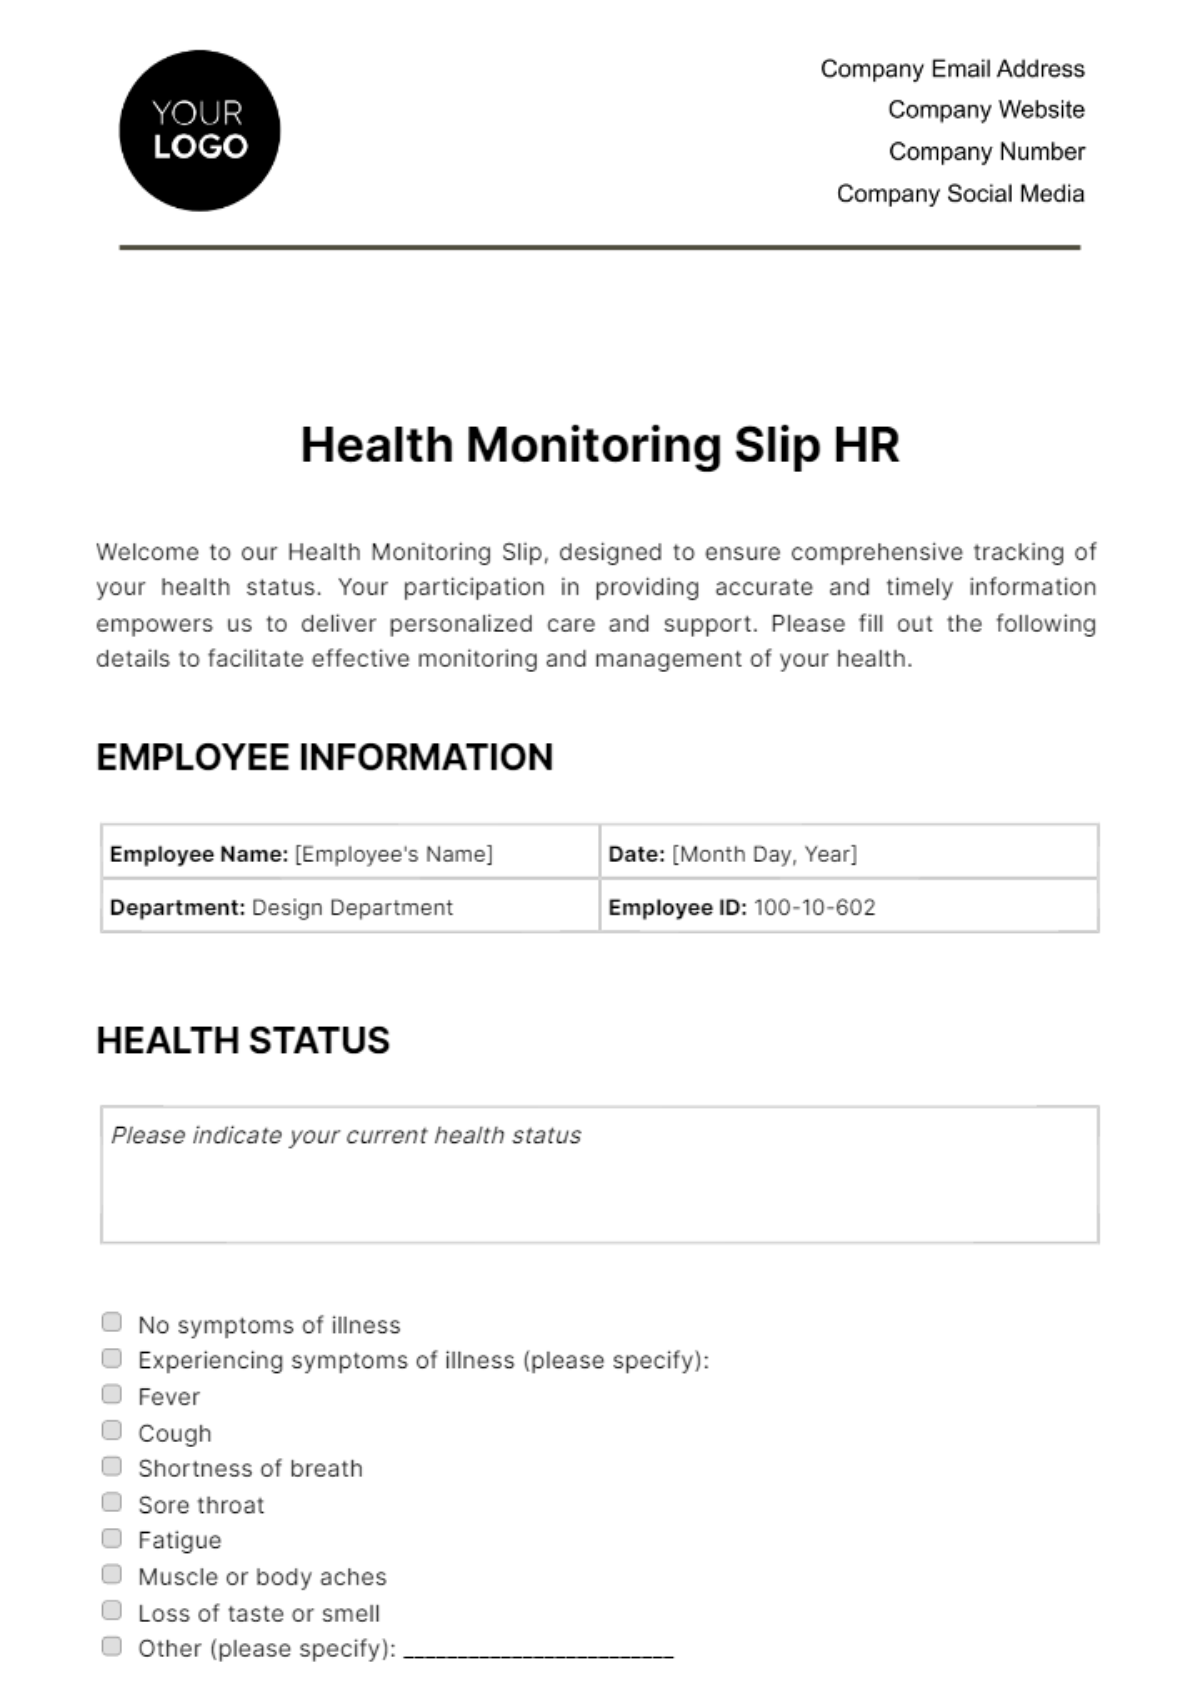 Health Monitoring Slip HR Template